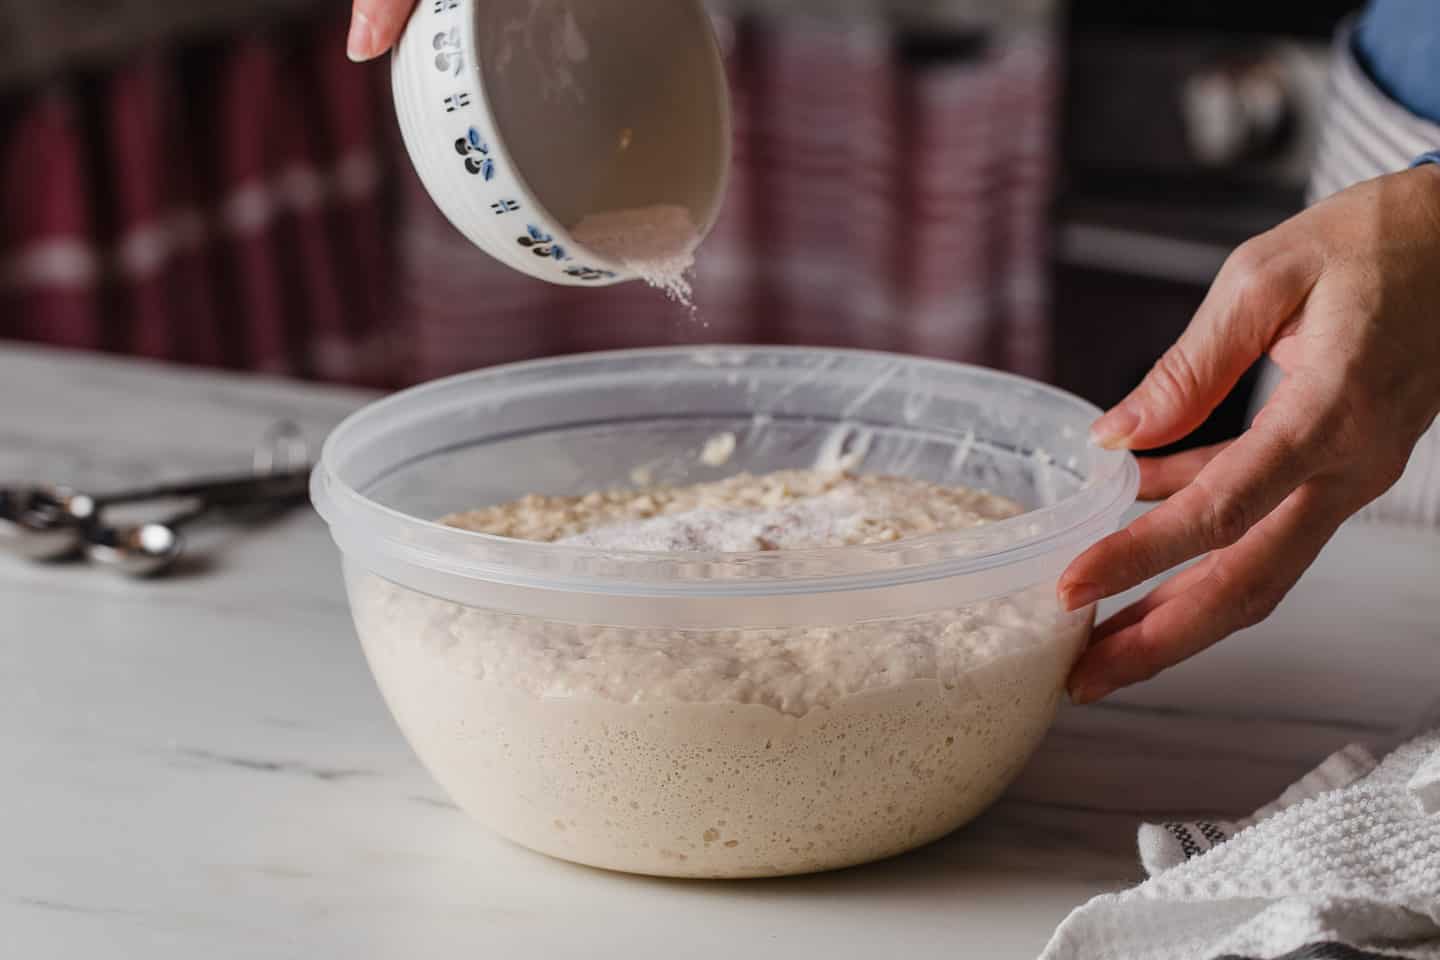 A woman adding salt, baking powder and baking soda to a bowl of dough.